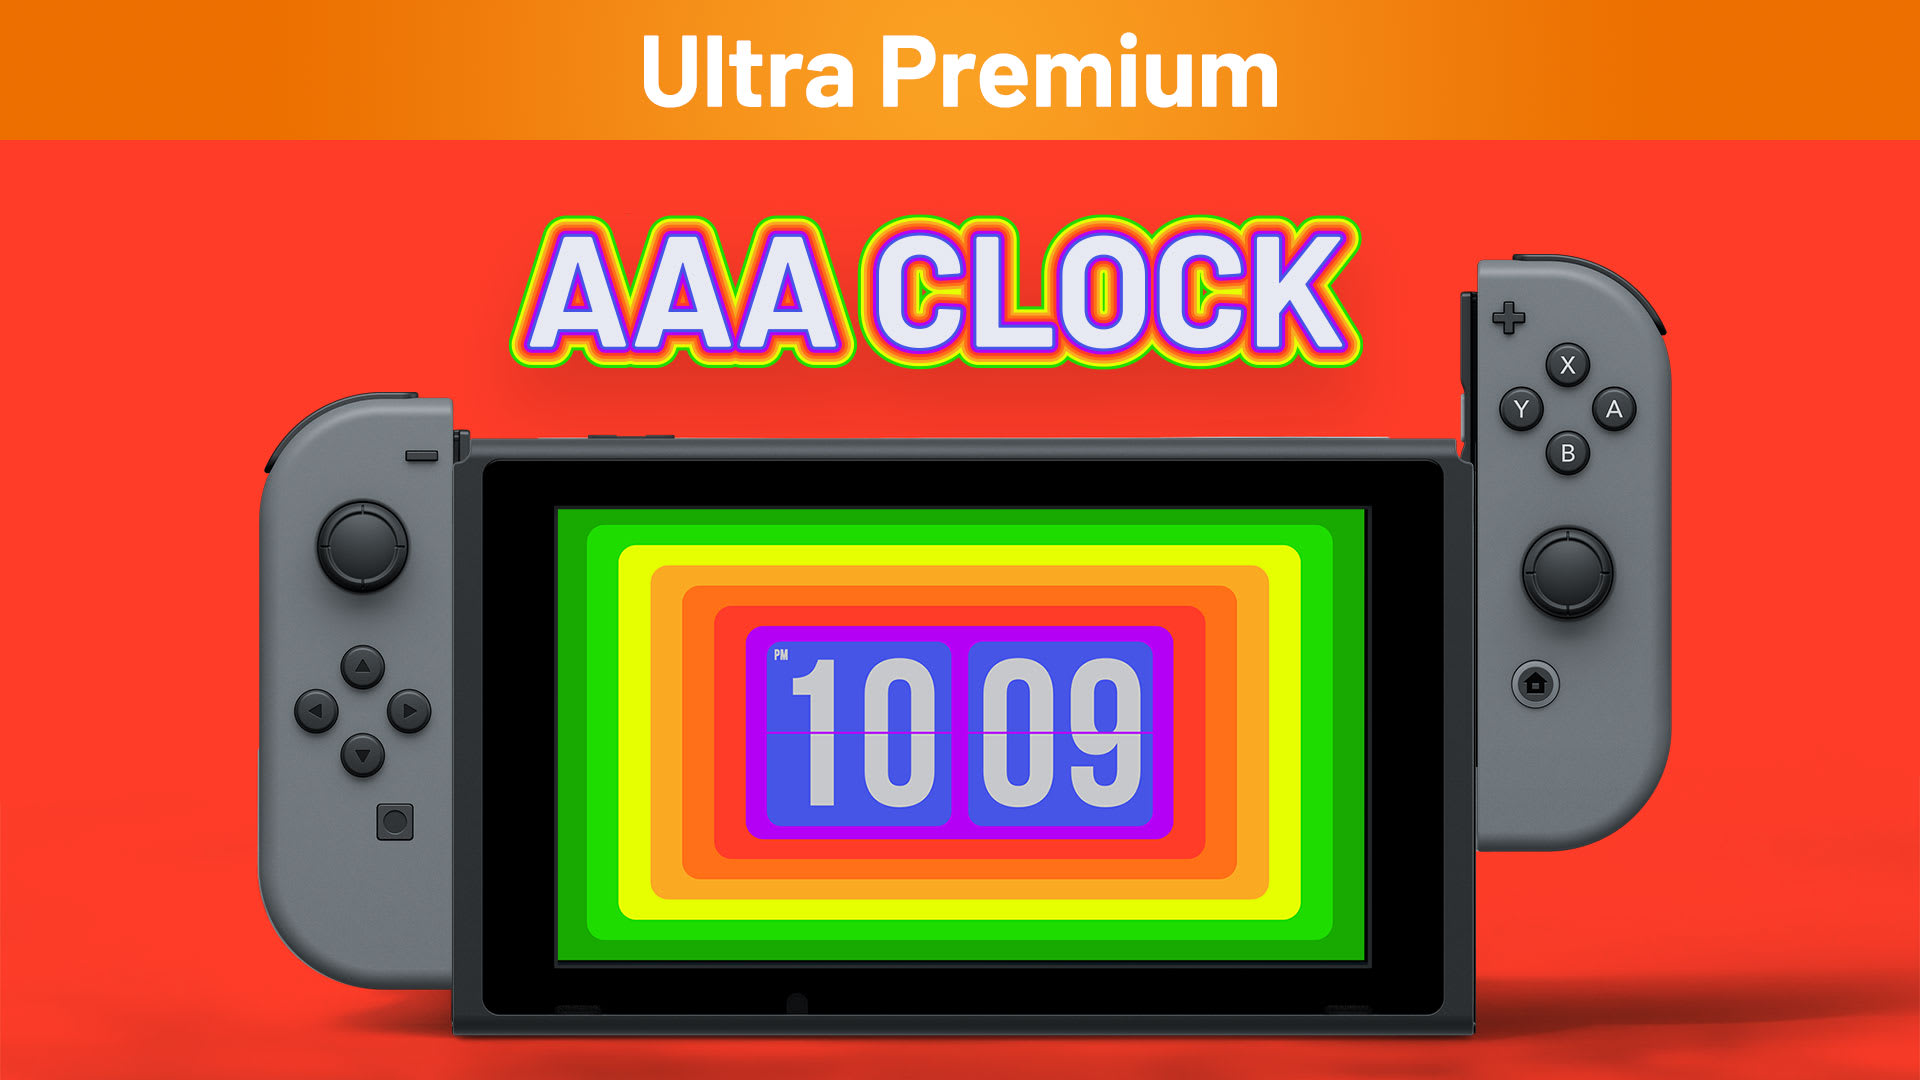 AAA Clock Ultra Premium